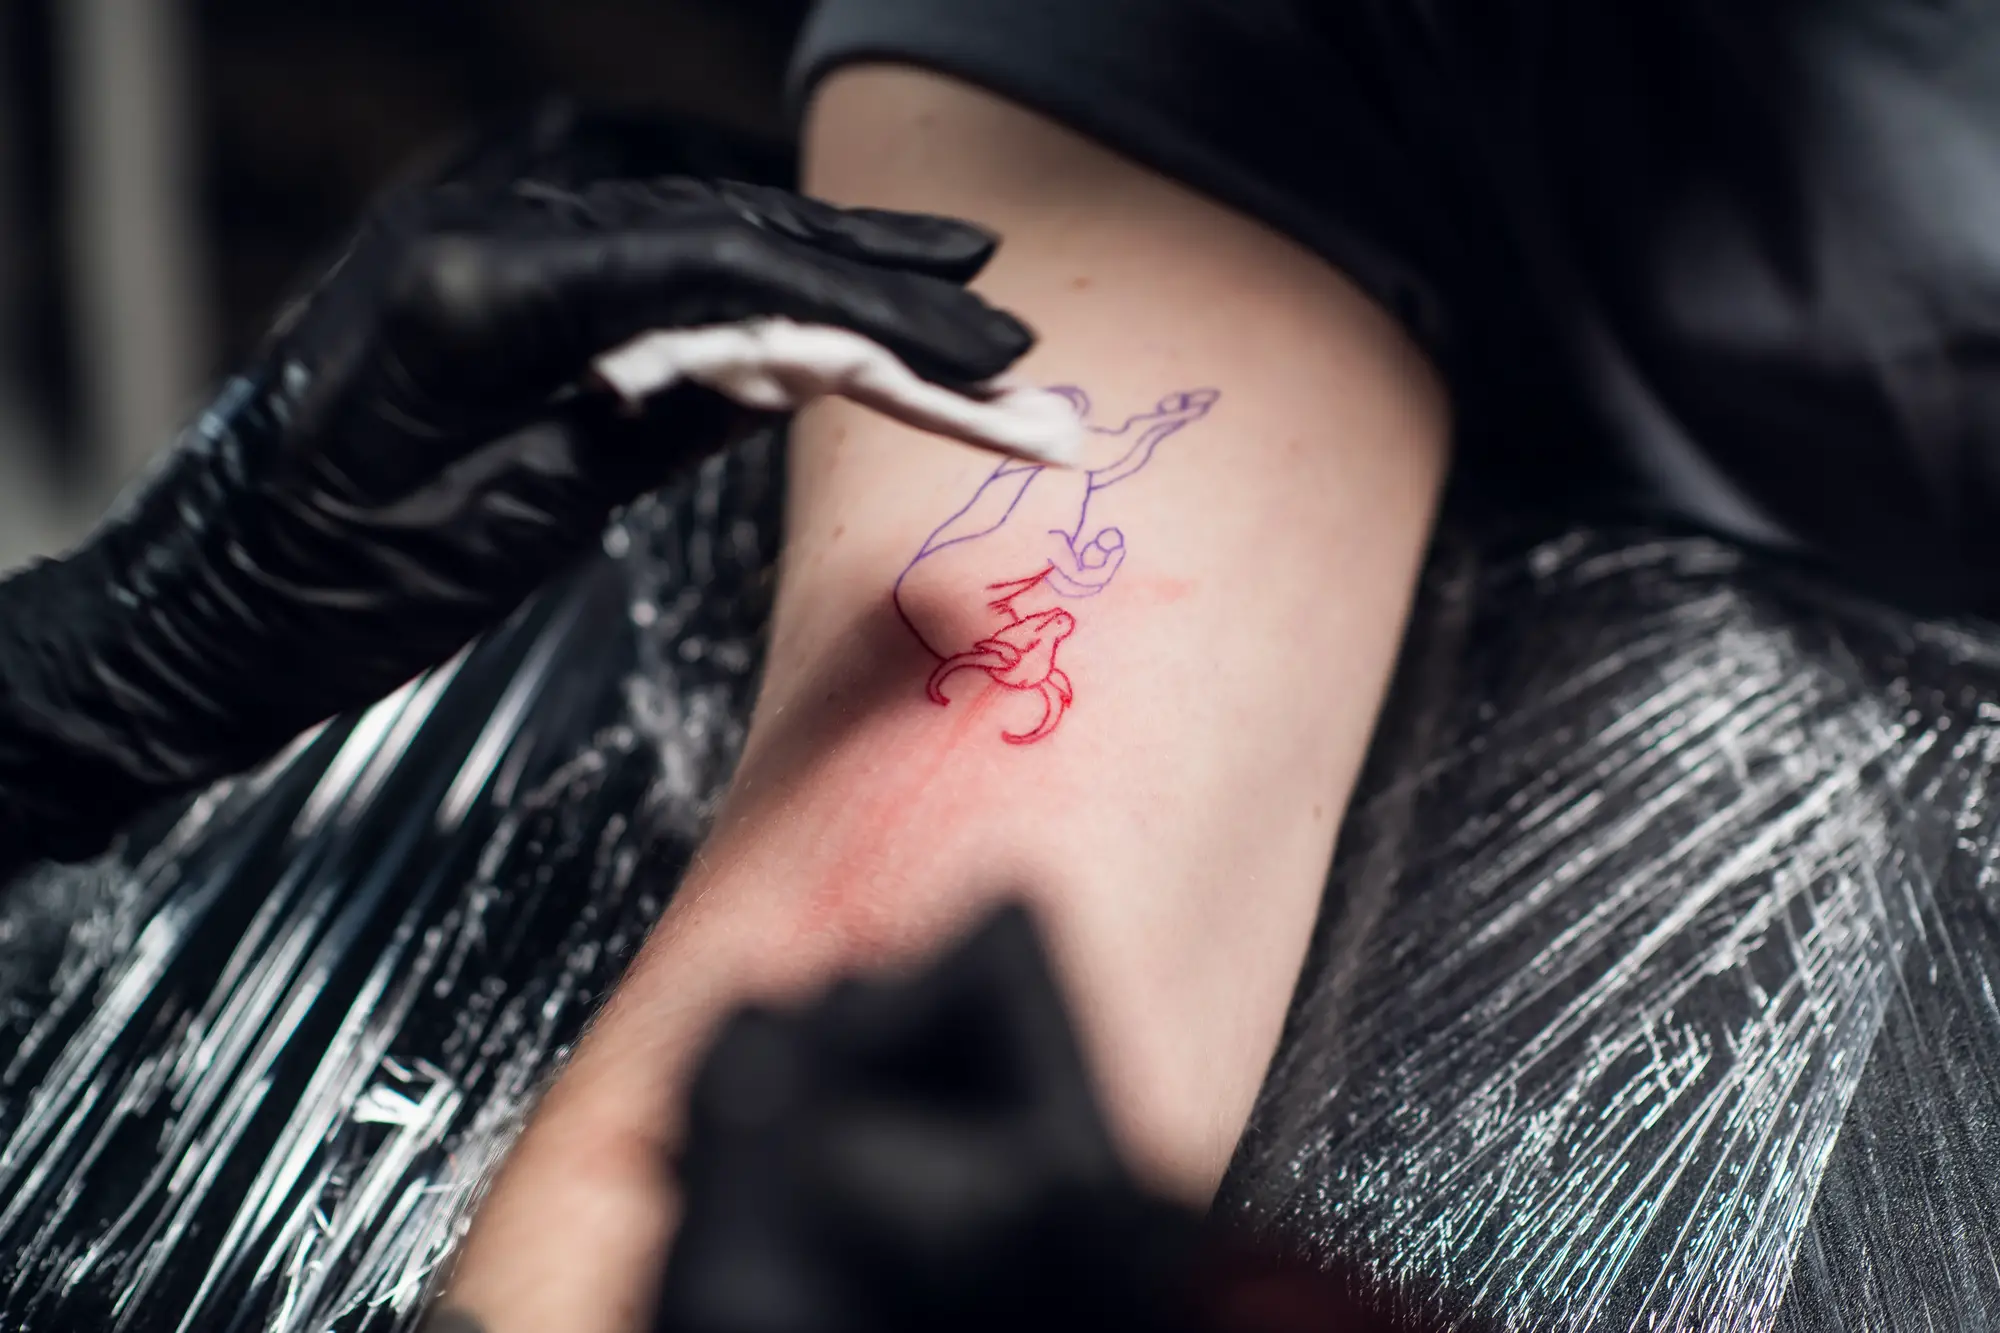 Bicep Tattoo Pain - How Much Does It Hurt? - Tattify